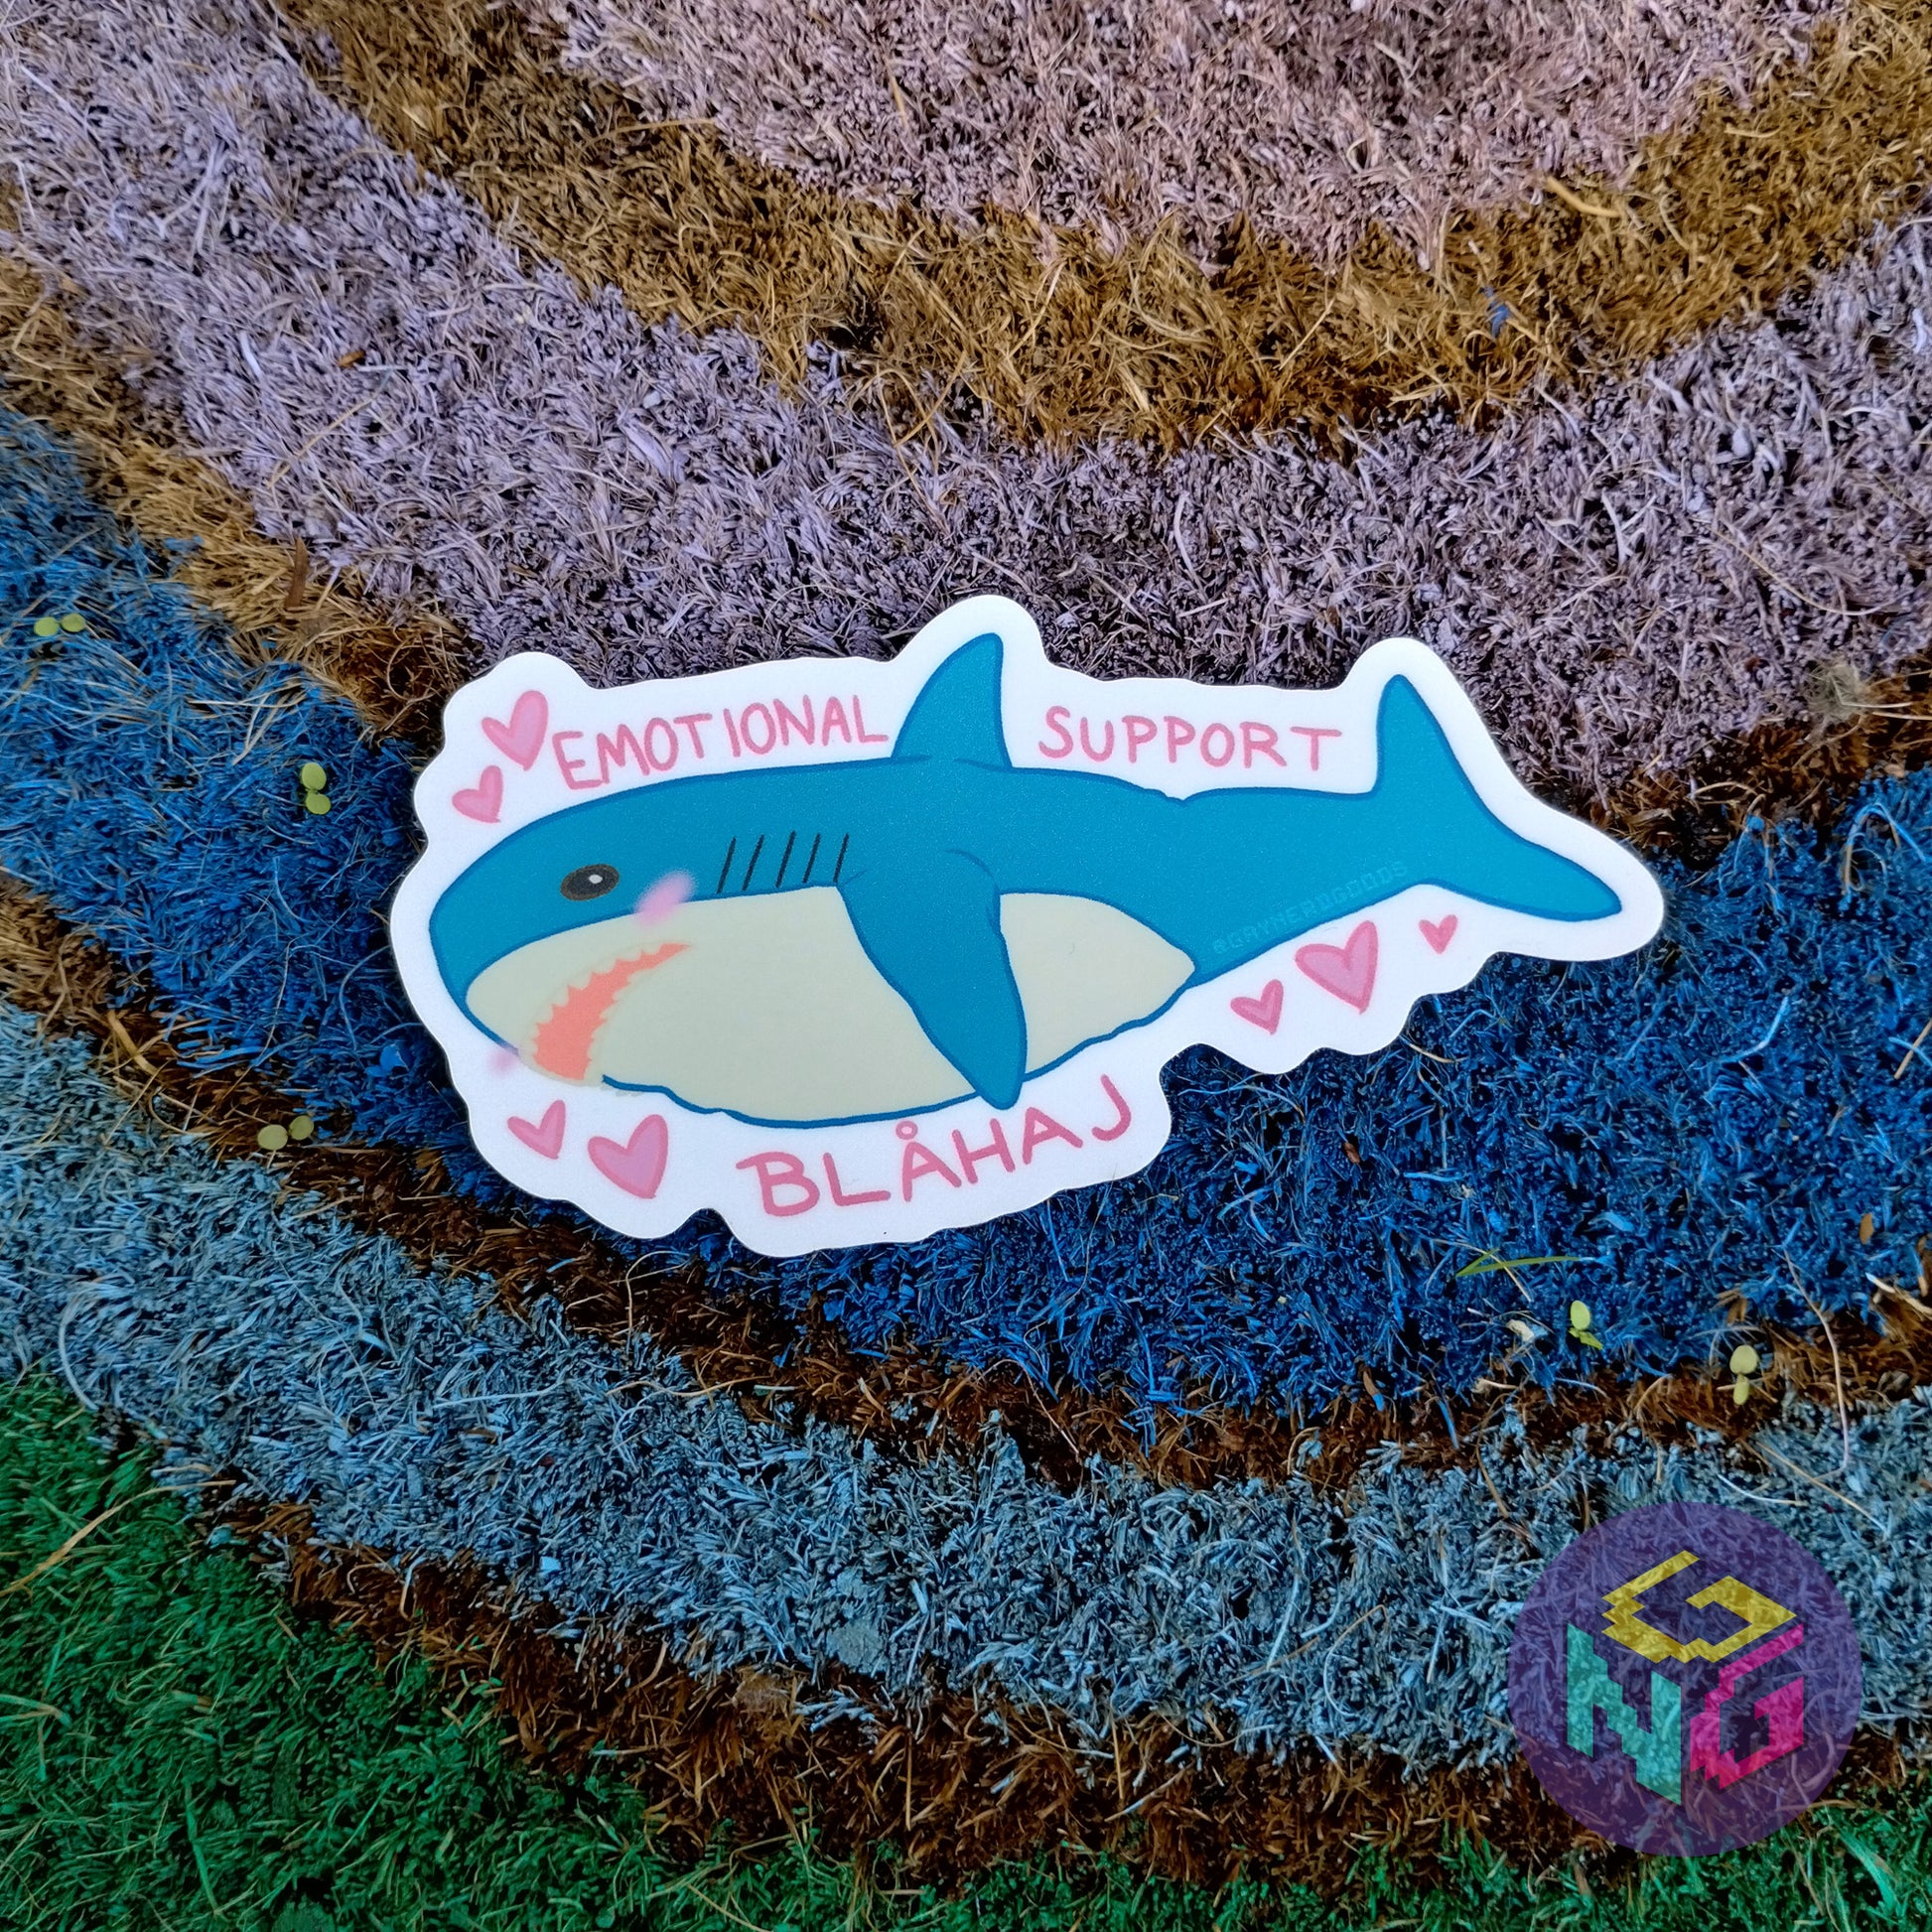 emotional support blahaj sticker lying flat on rainbow welcome mat